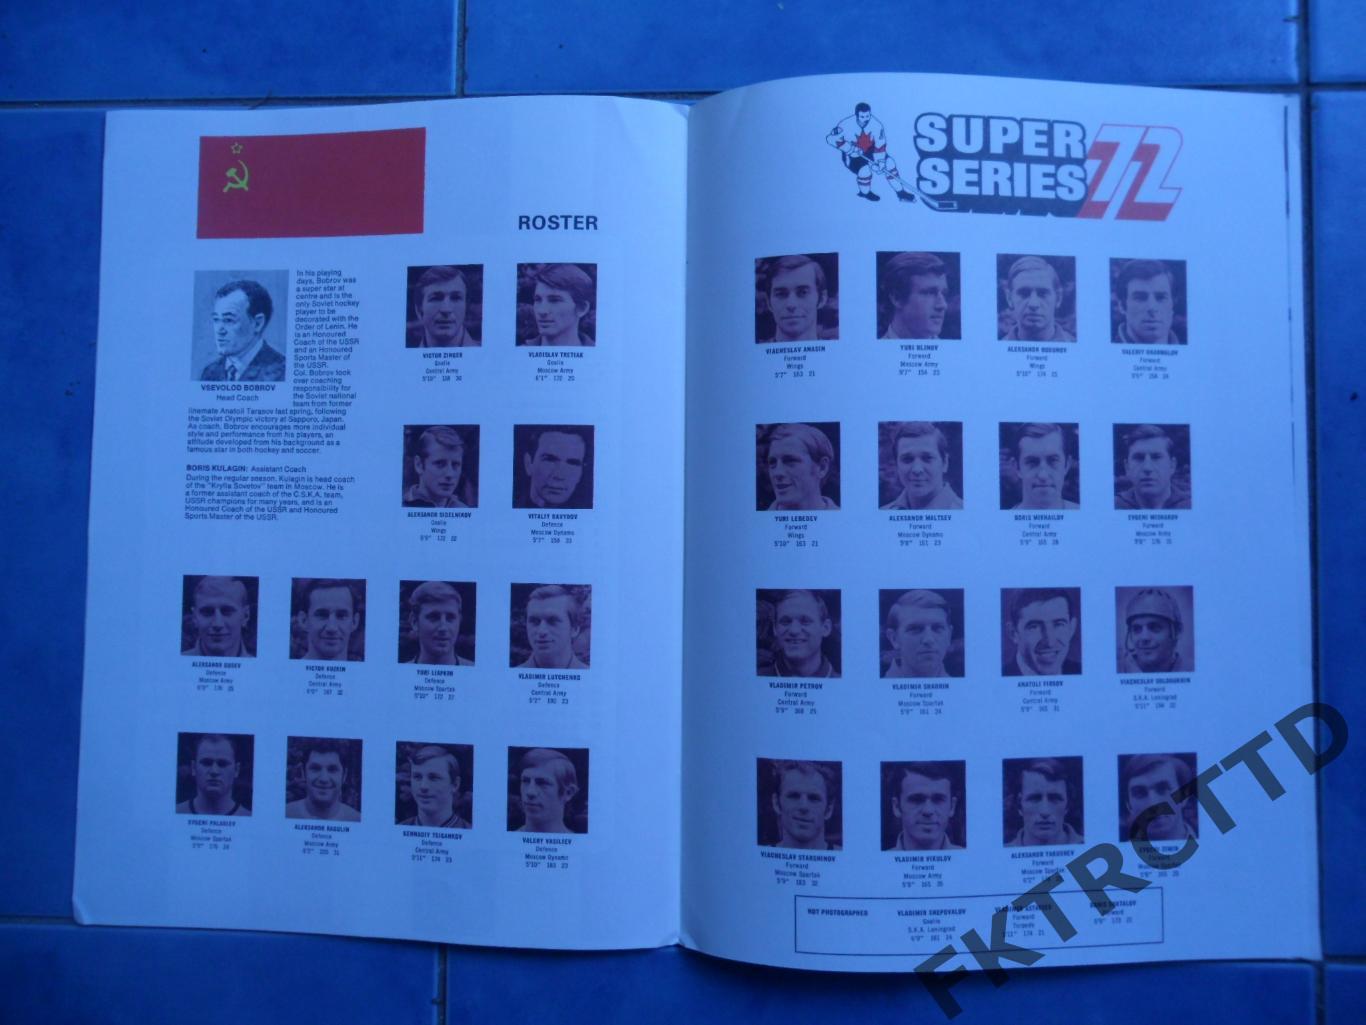 Канада - СССР 1972. Суперсерия. Официальная программа из Канады-РАСПРОДАЖА 2